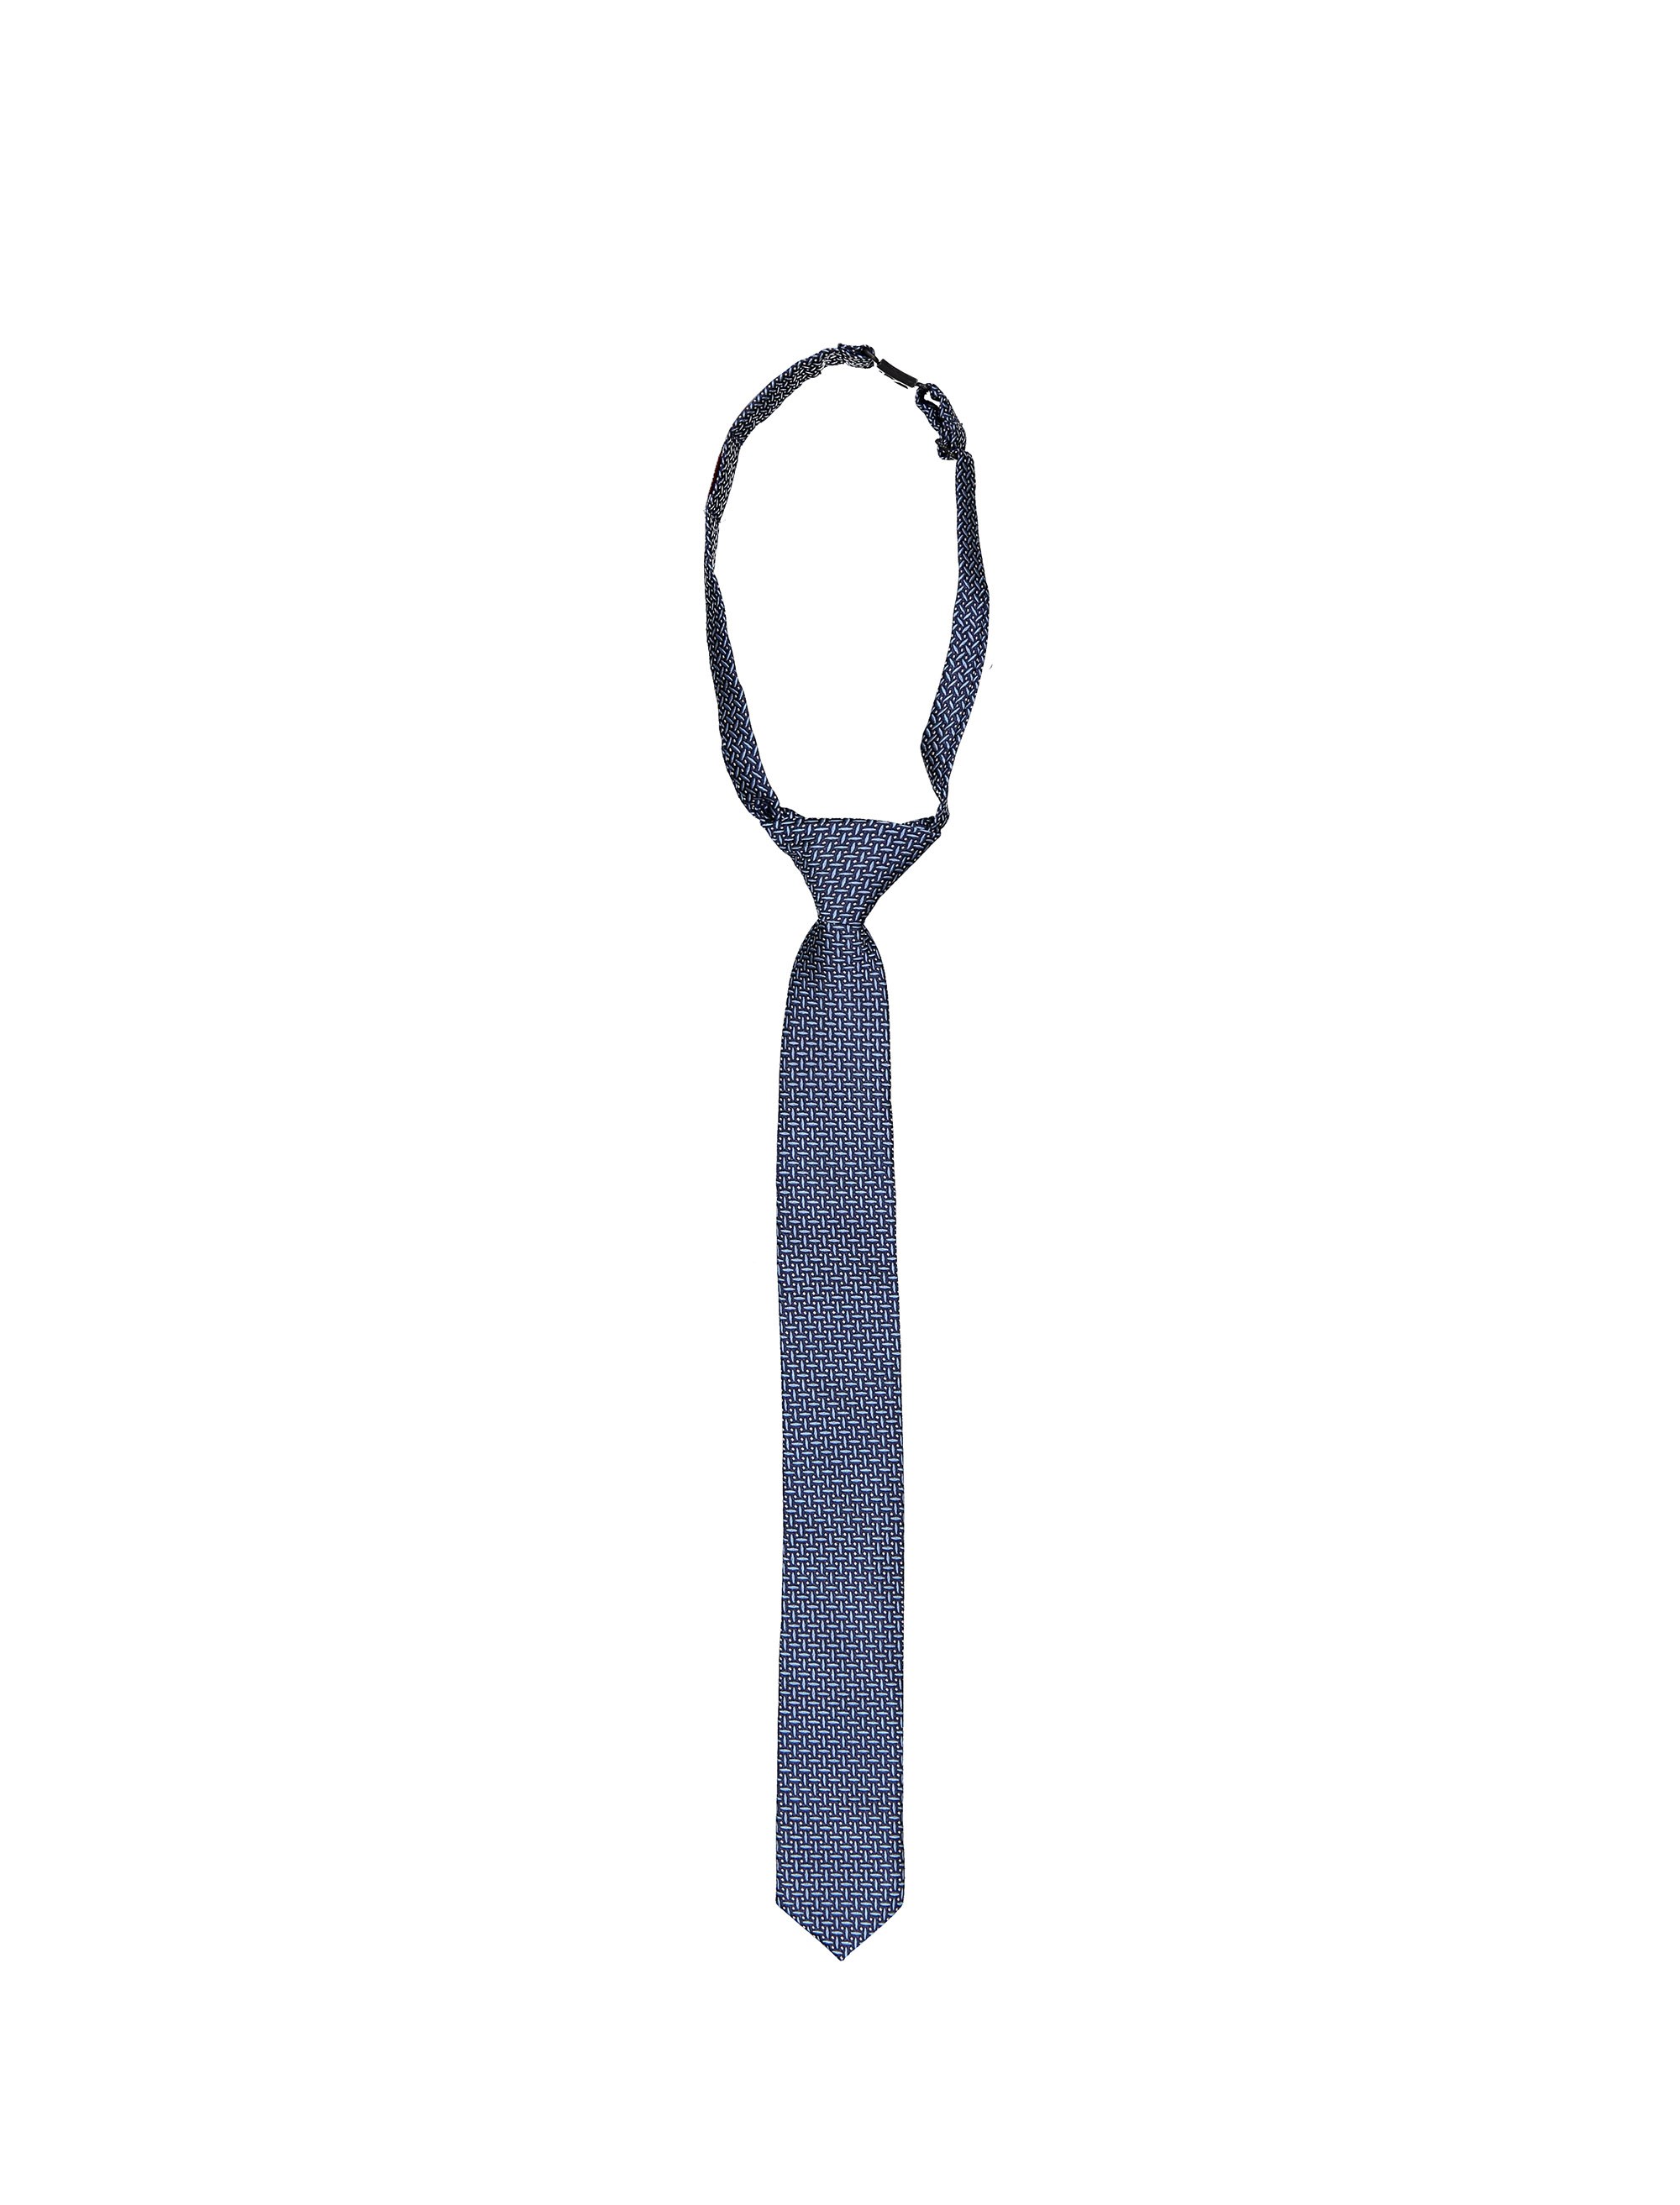 کراوات طرح دار پسرانه - بلوکیدز تک سایز